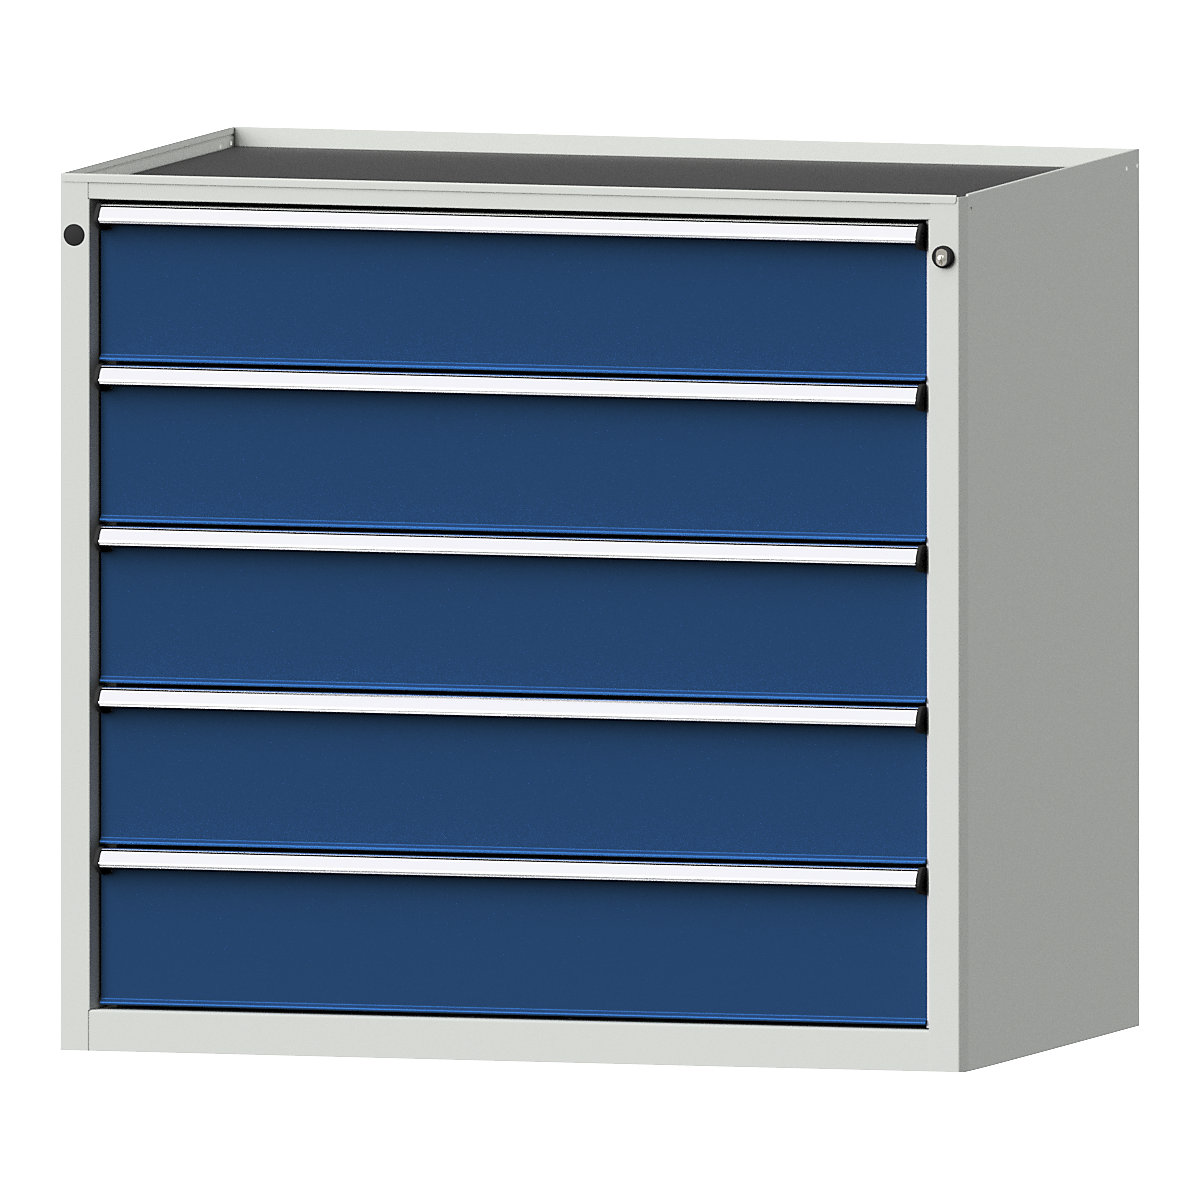 Armoire à tiroirs – ANKE, l x p 1060 x 675 mm, 5 tiroirs, hauteur 980 mm, façade bleu gentiane-8